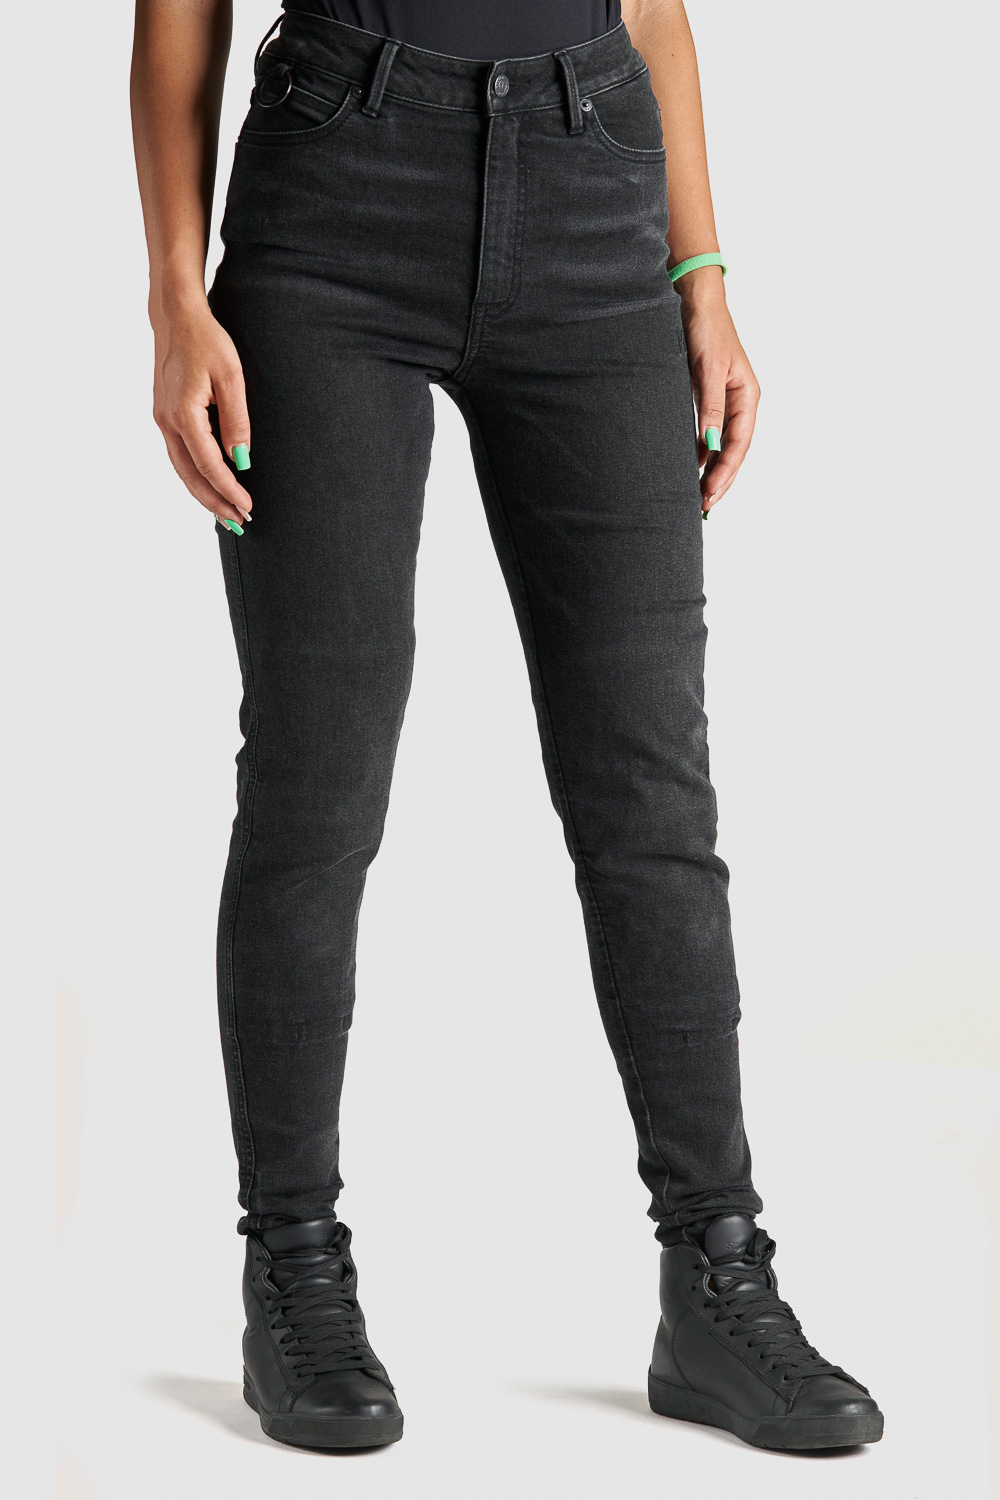 KUSARI COR 01 – Women Motorcycle Jeans Skinny-Fit Cordura® 1